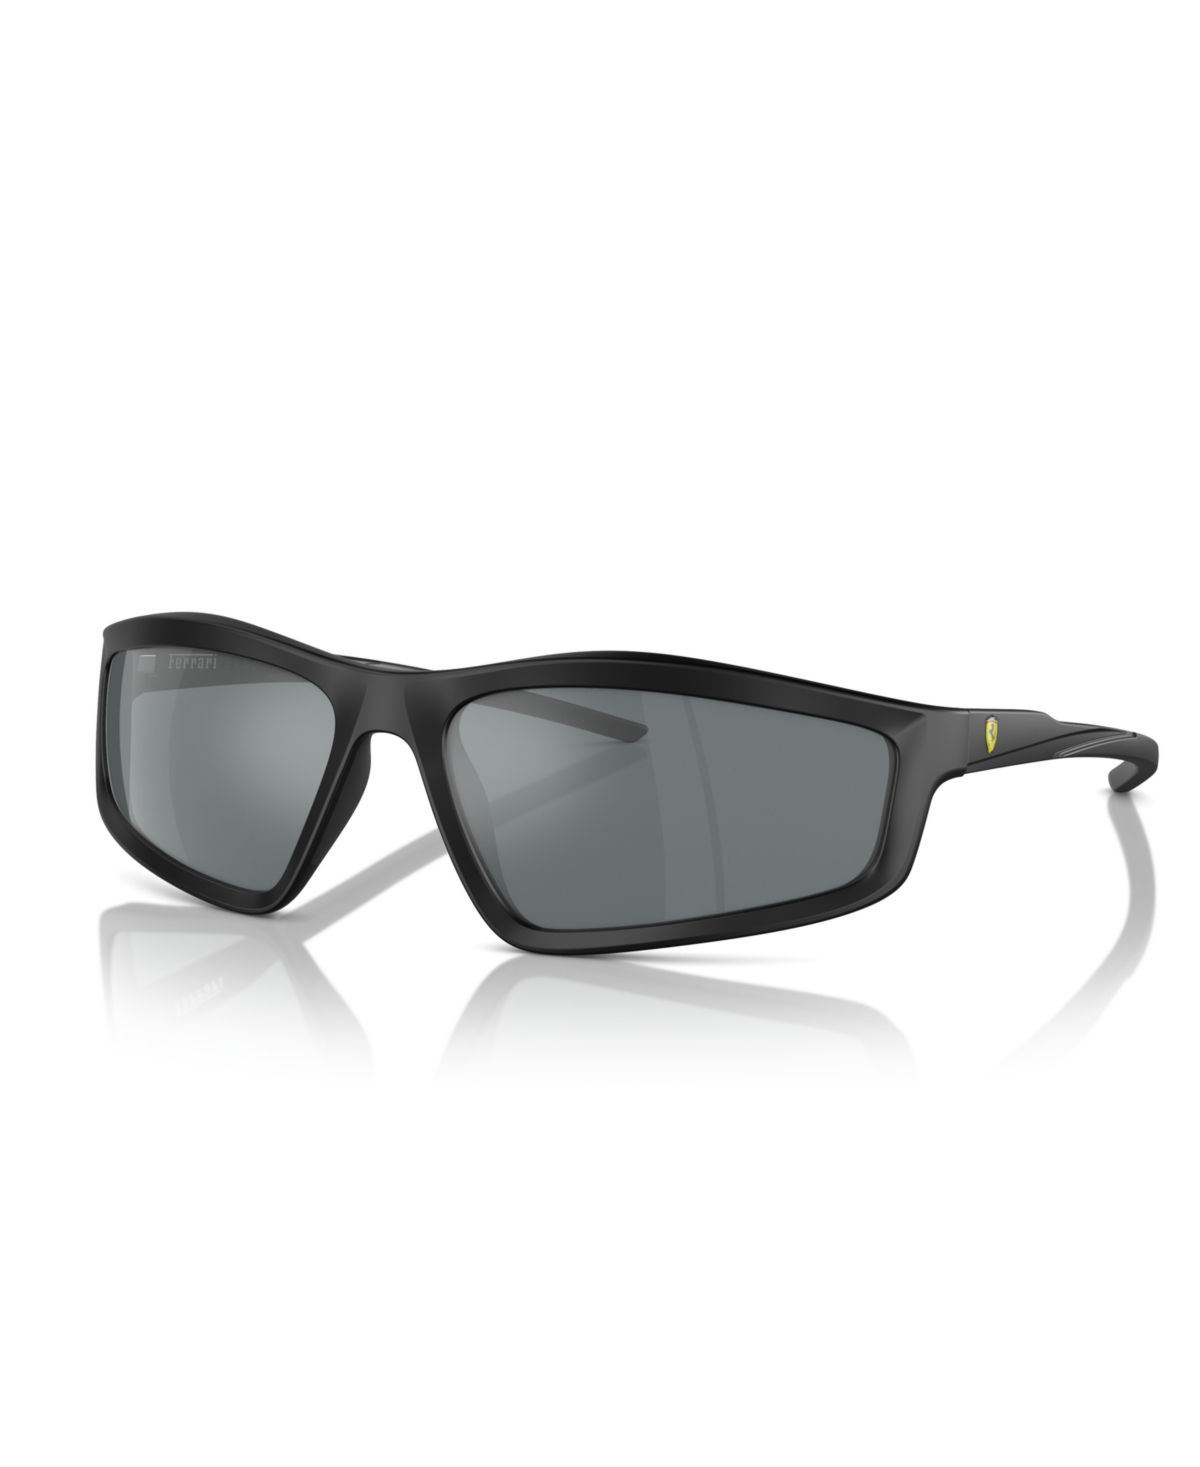 Scuderia Ferrari Men's Sunglasses, FZ6007U - Transparent Grey